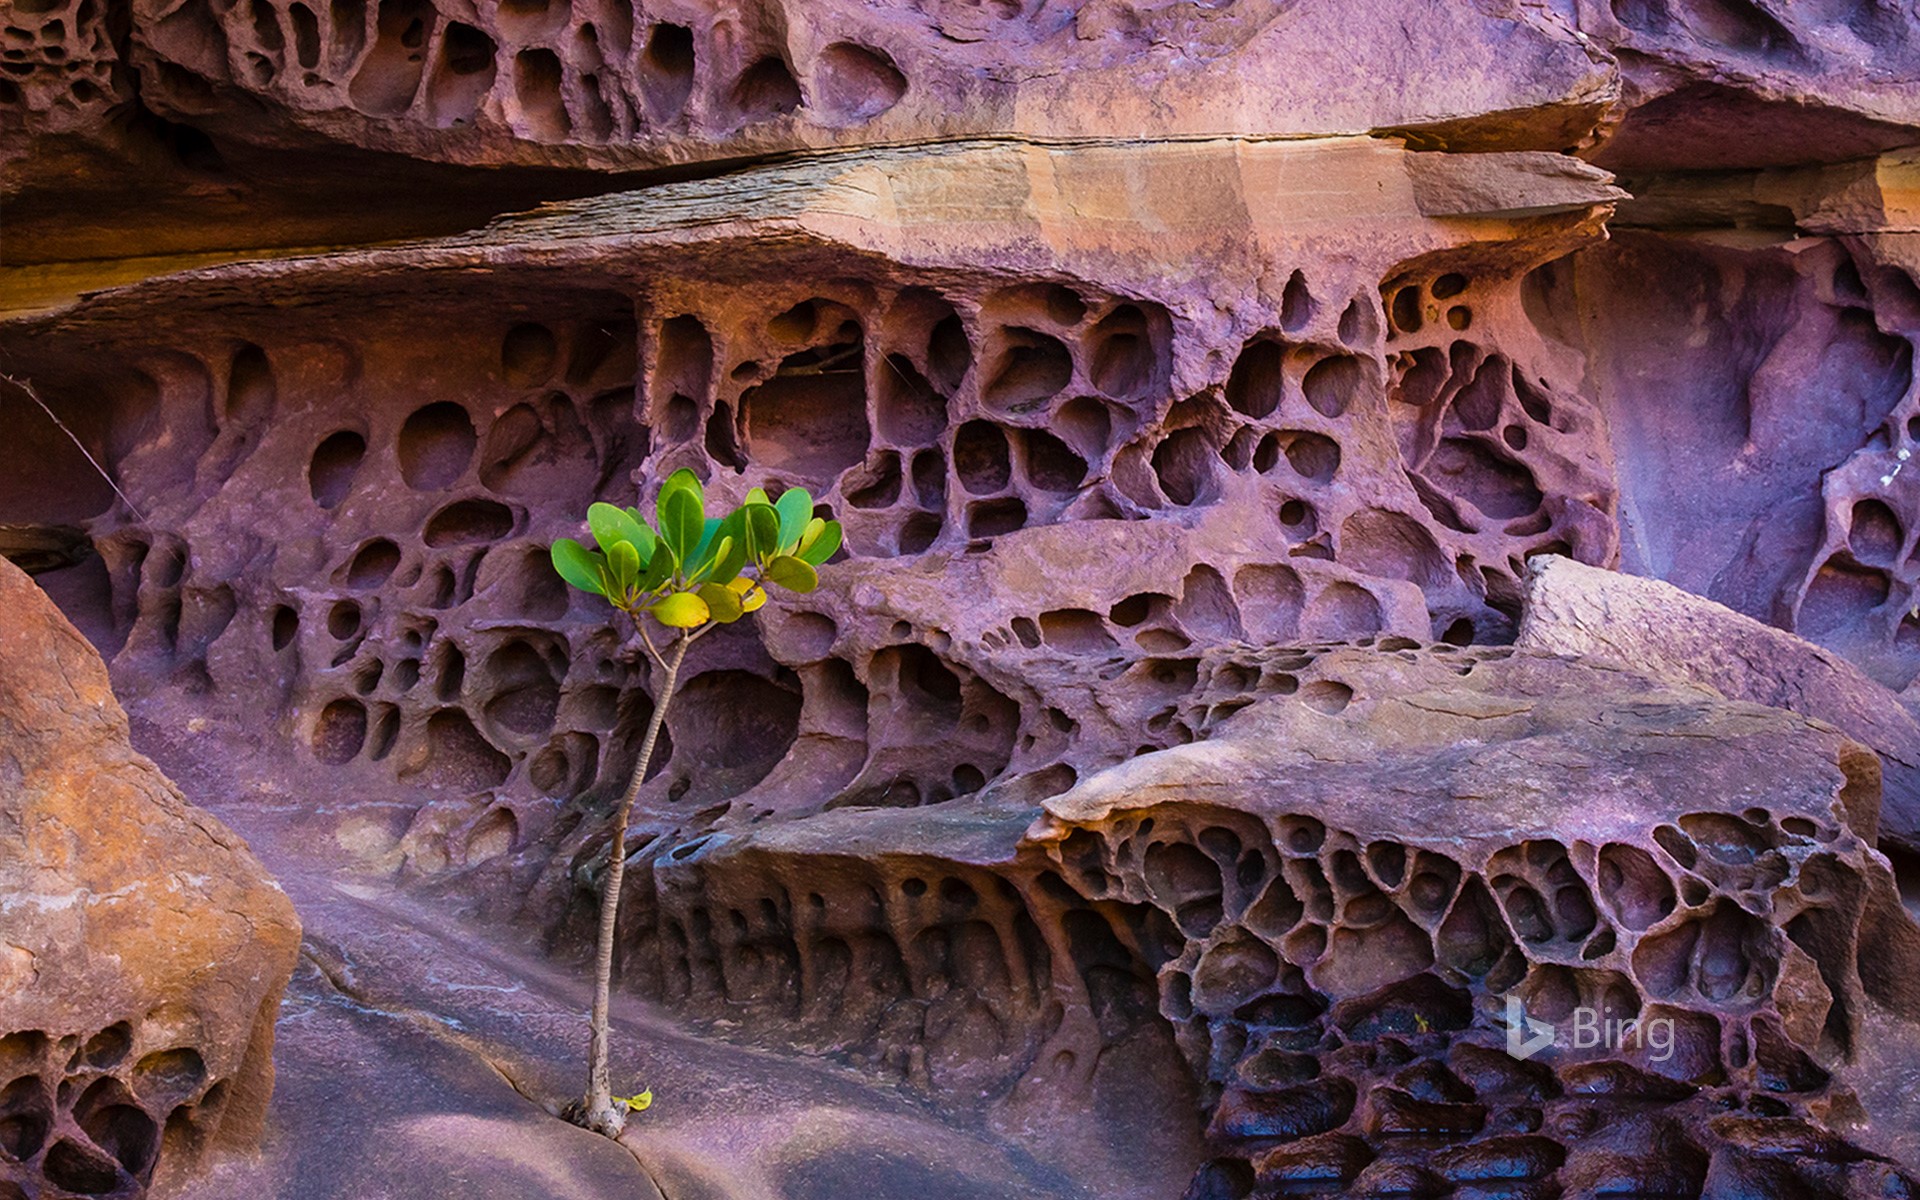 Honeycomb weathering in the Koolama Bay, Northwest Australia